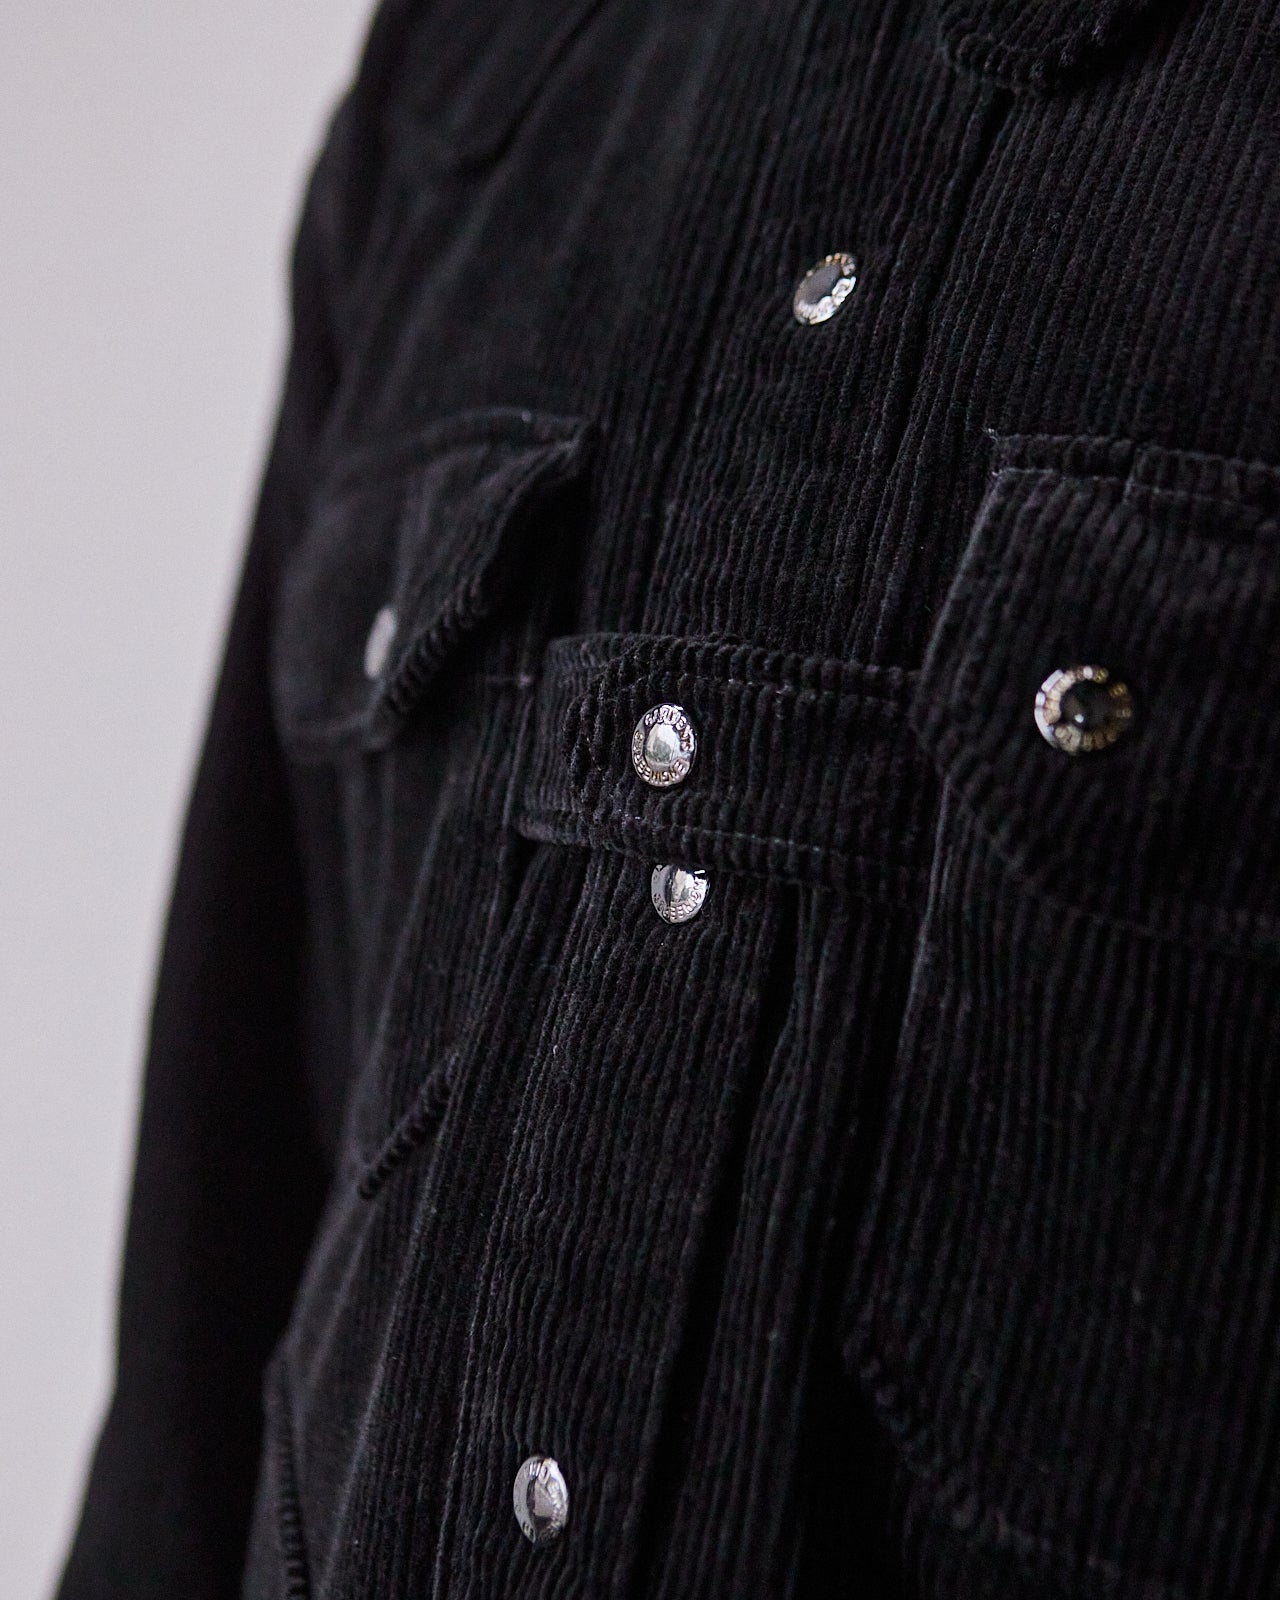 Engineered Garments Cotton Explorer Shirt Jacket, Black